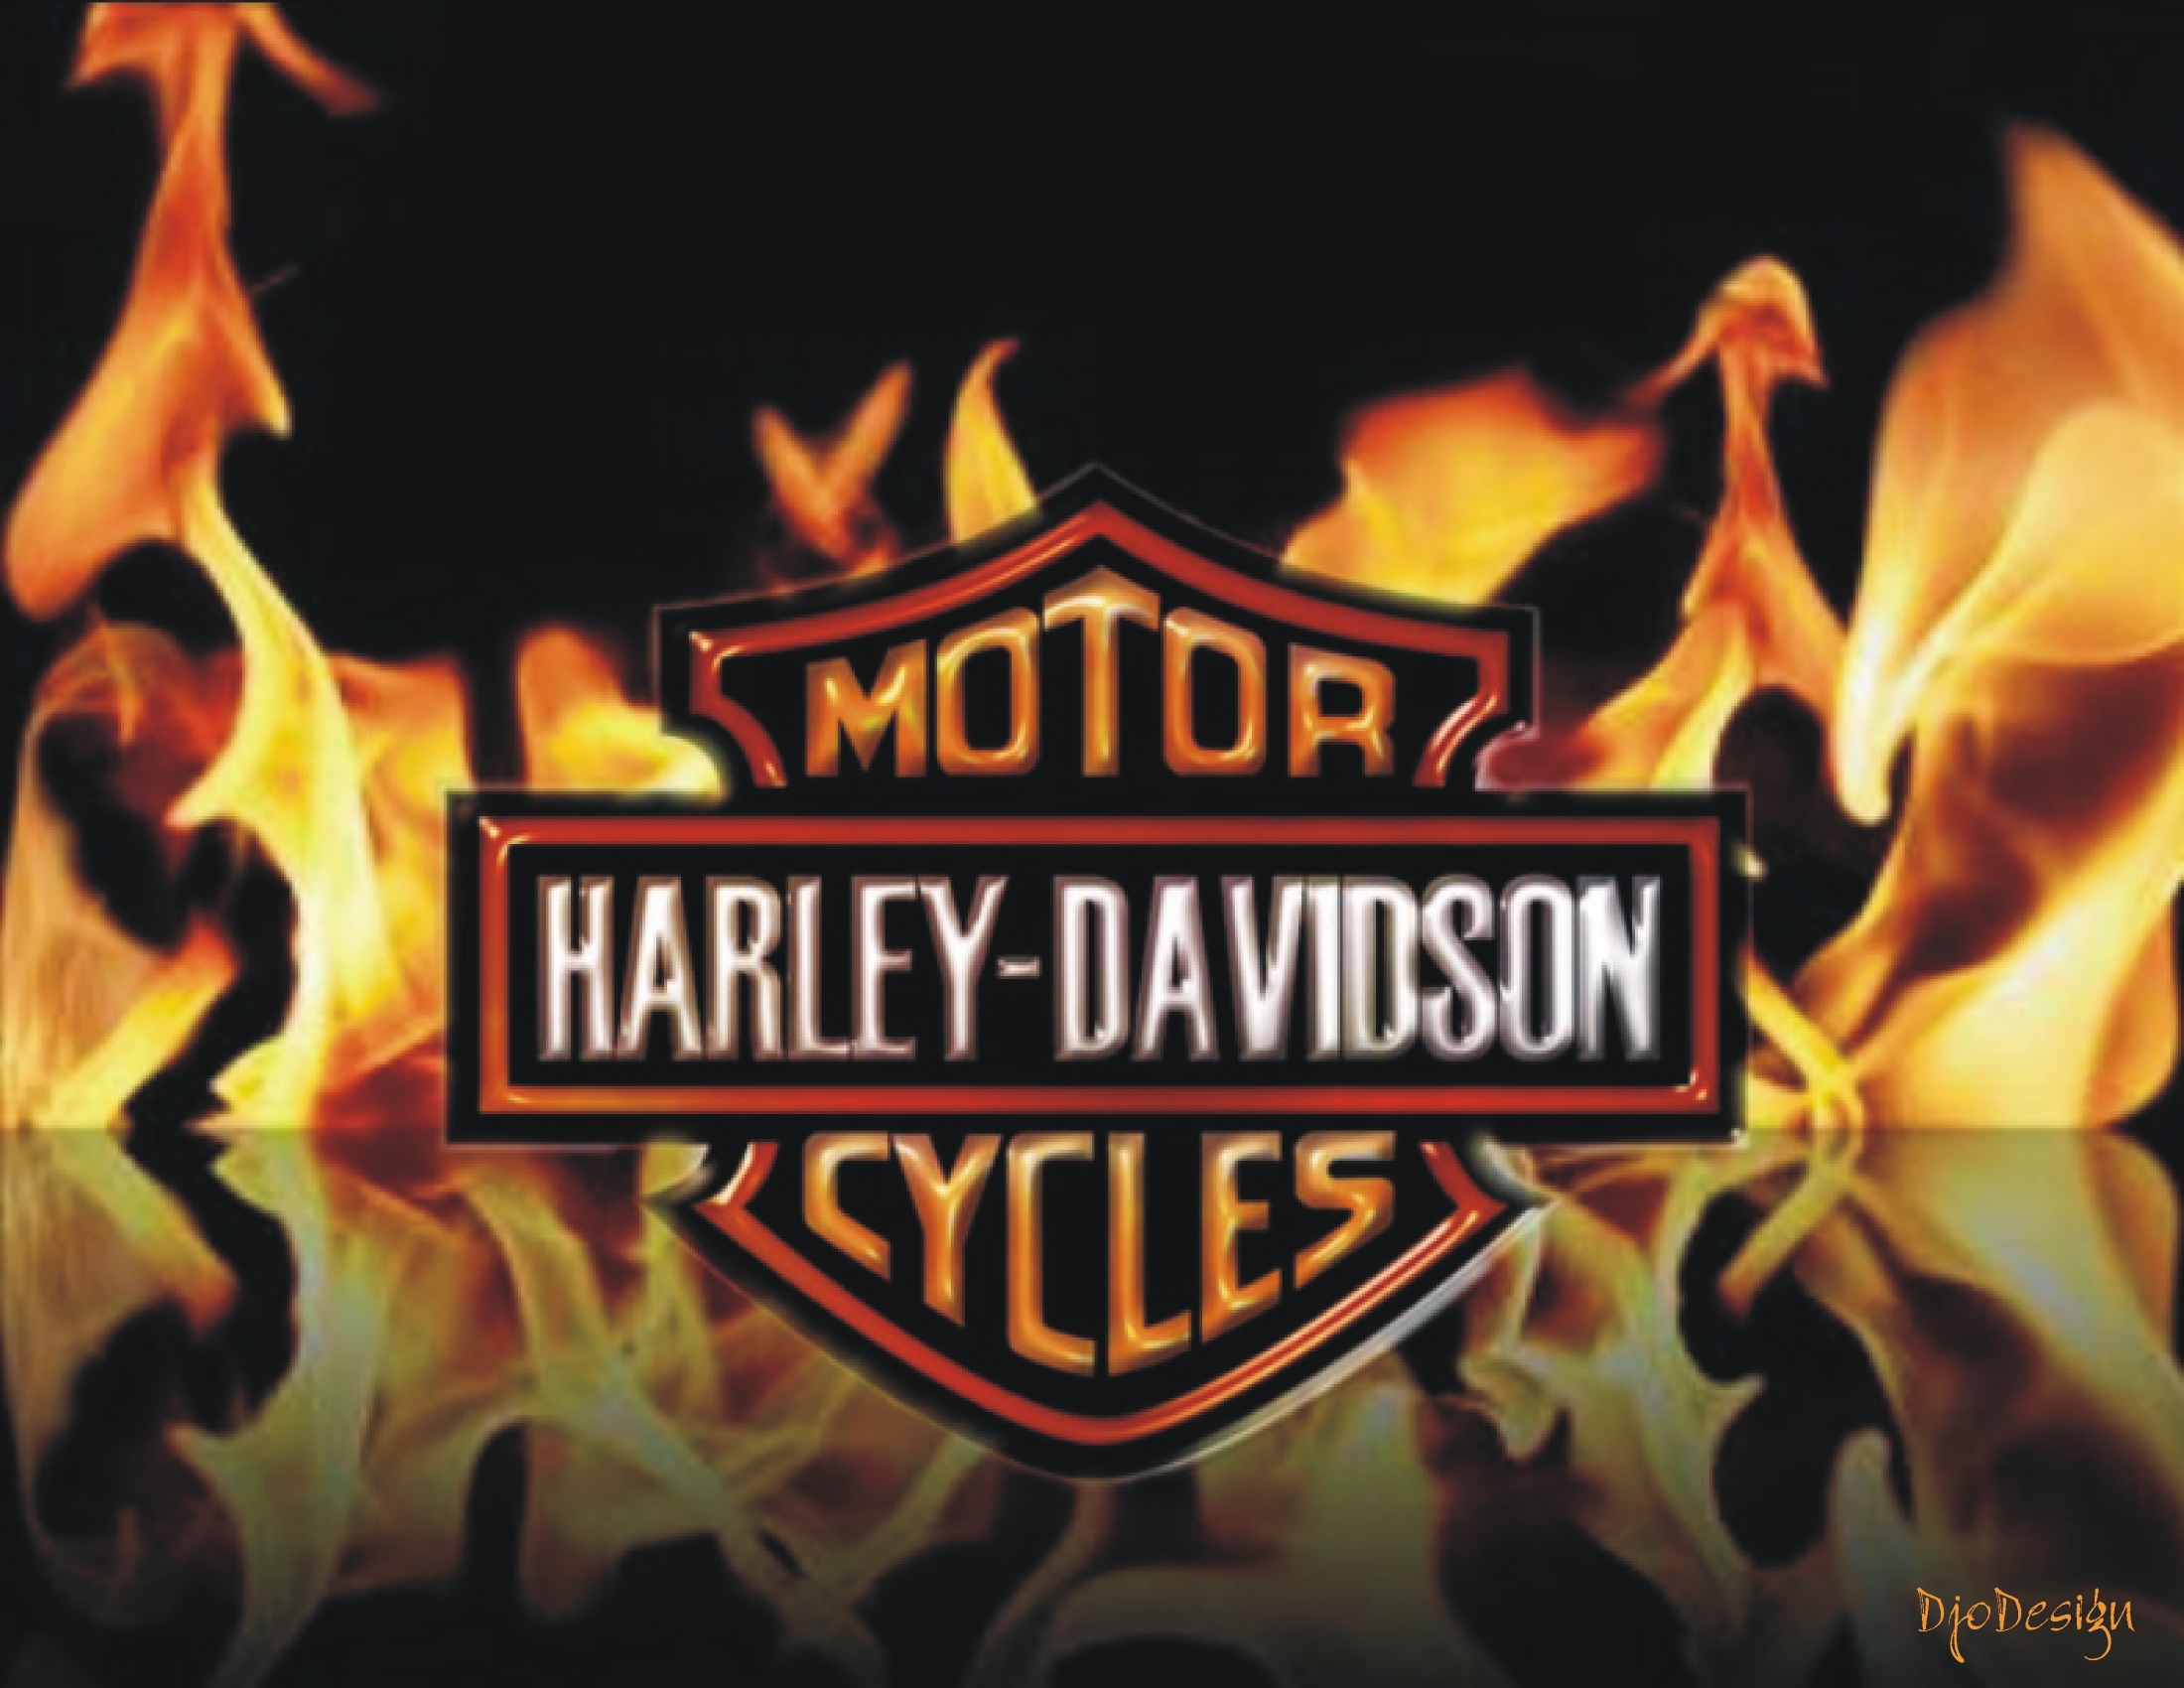 harley davidson, vehicles, flame, logo iphone wallpaper